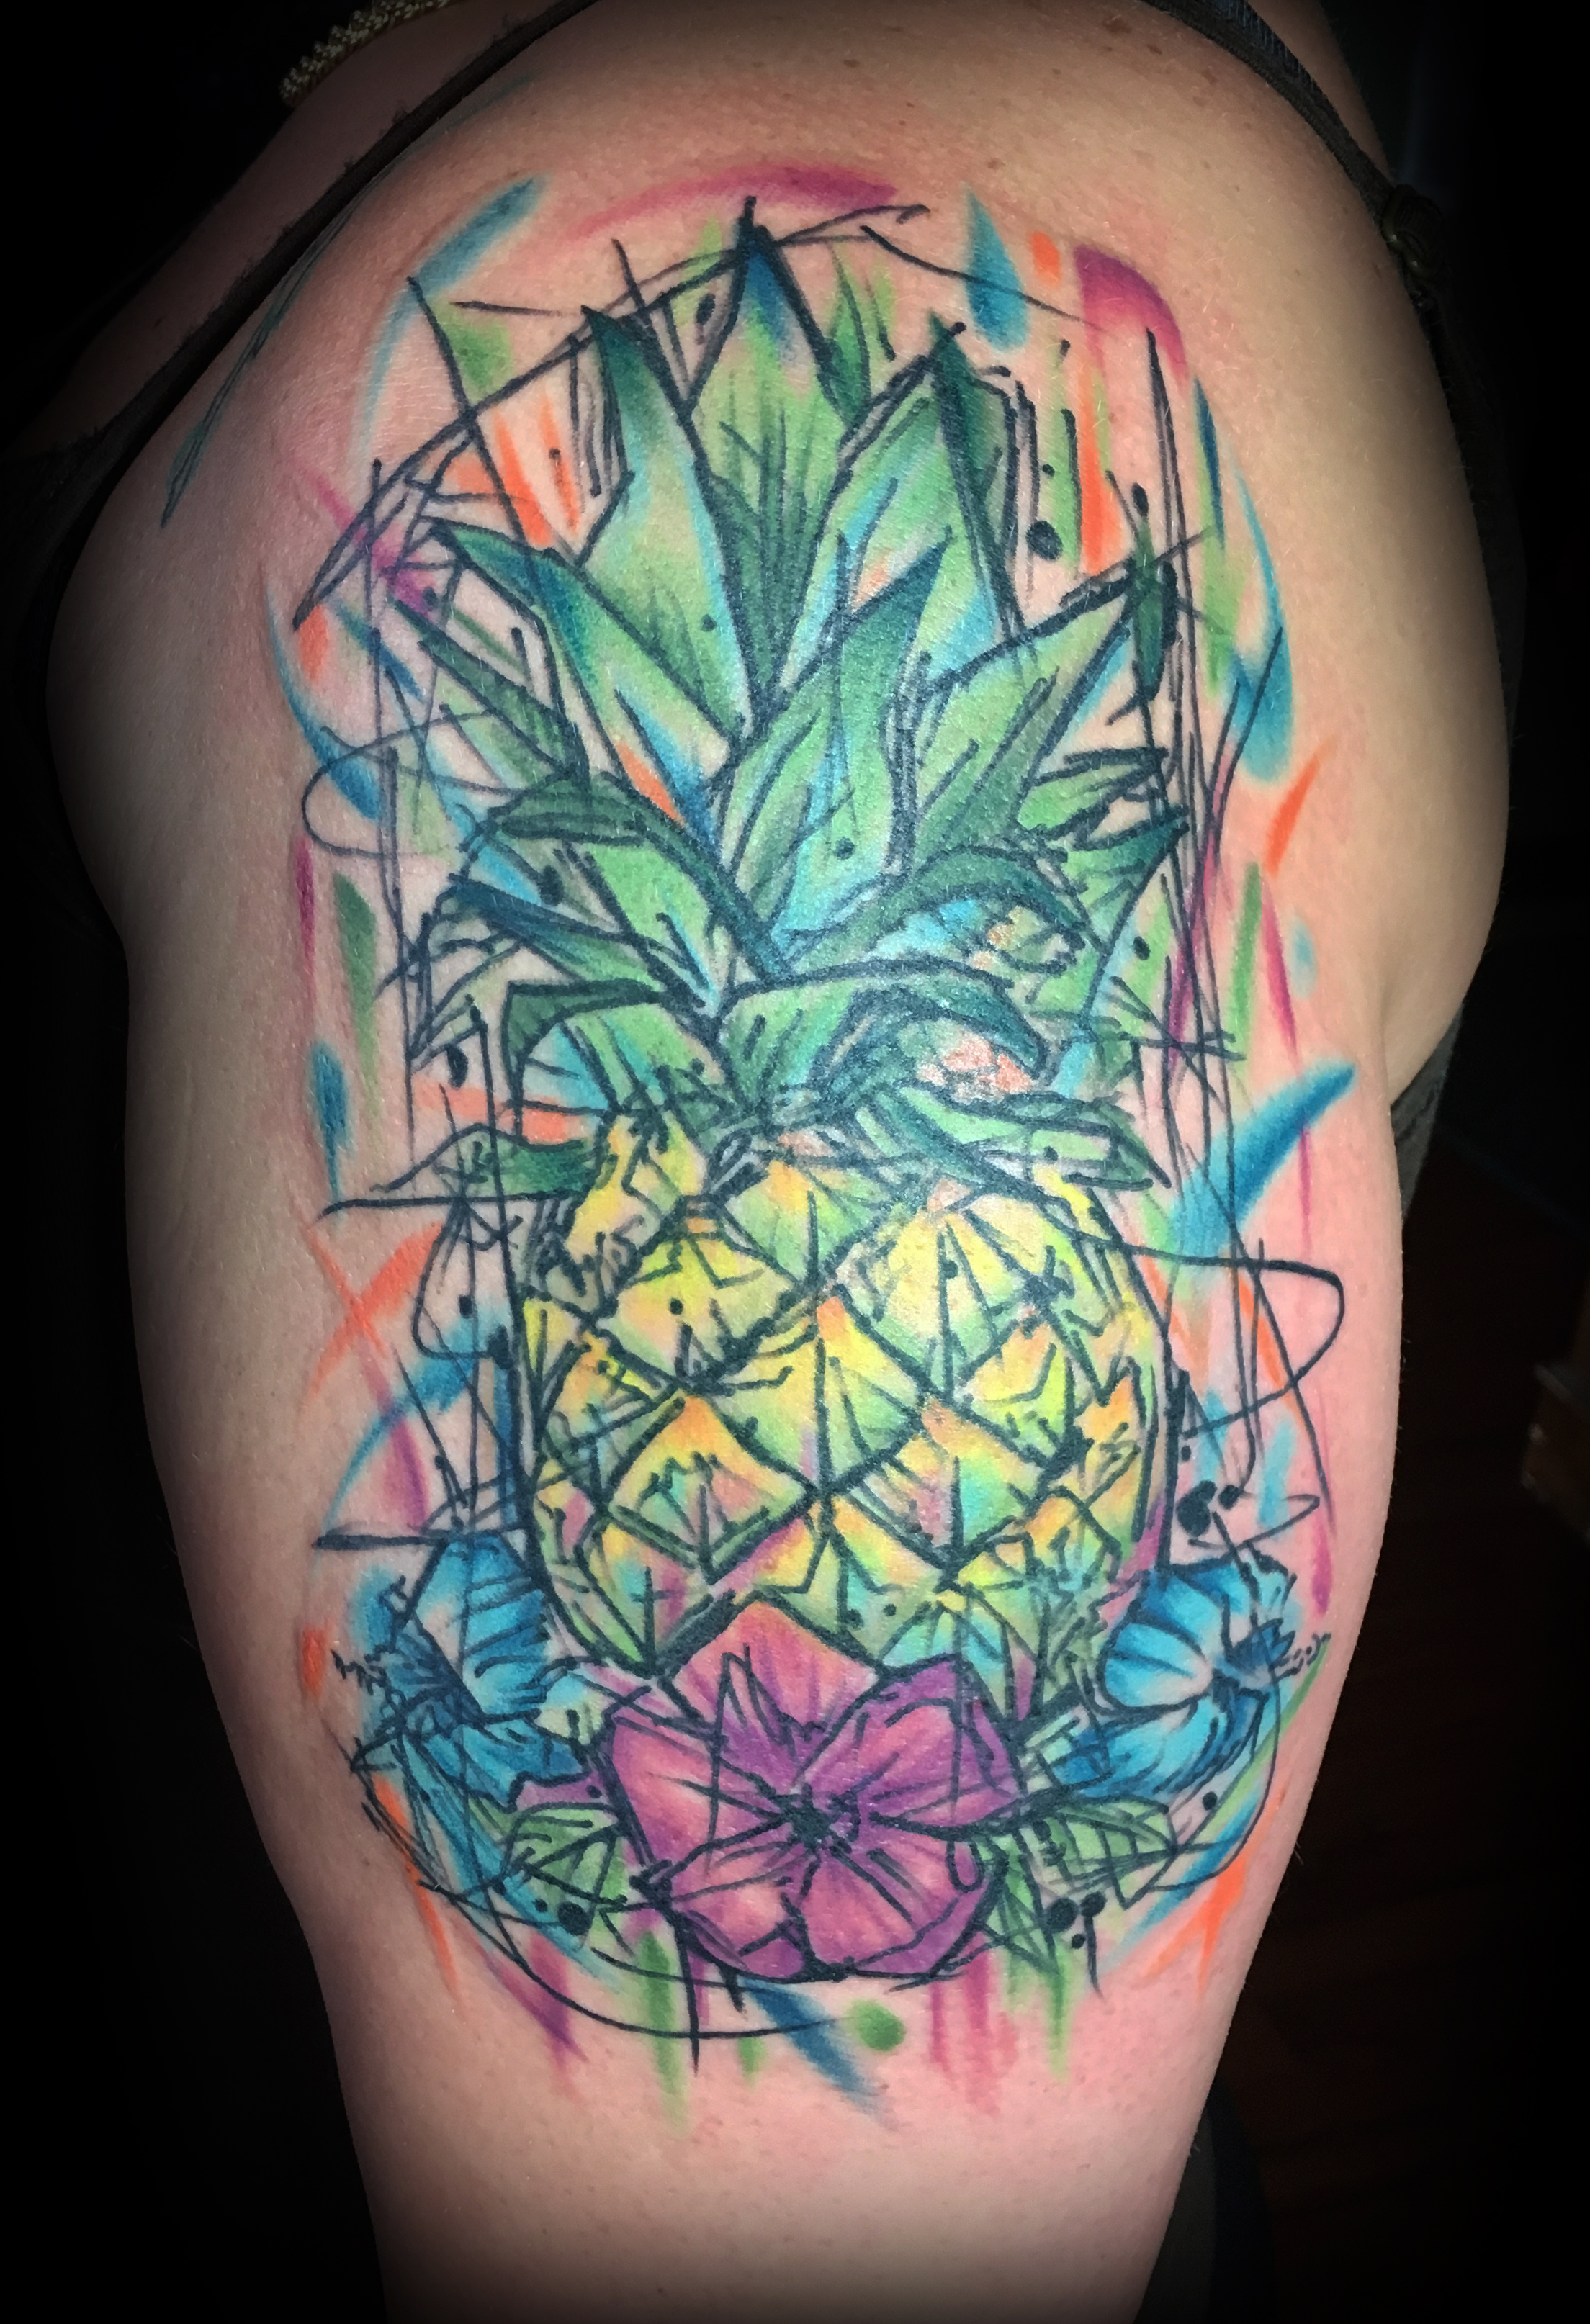 pineapple.jpg